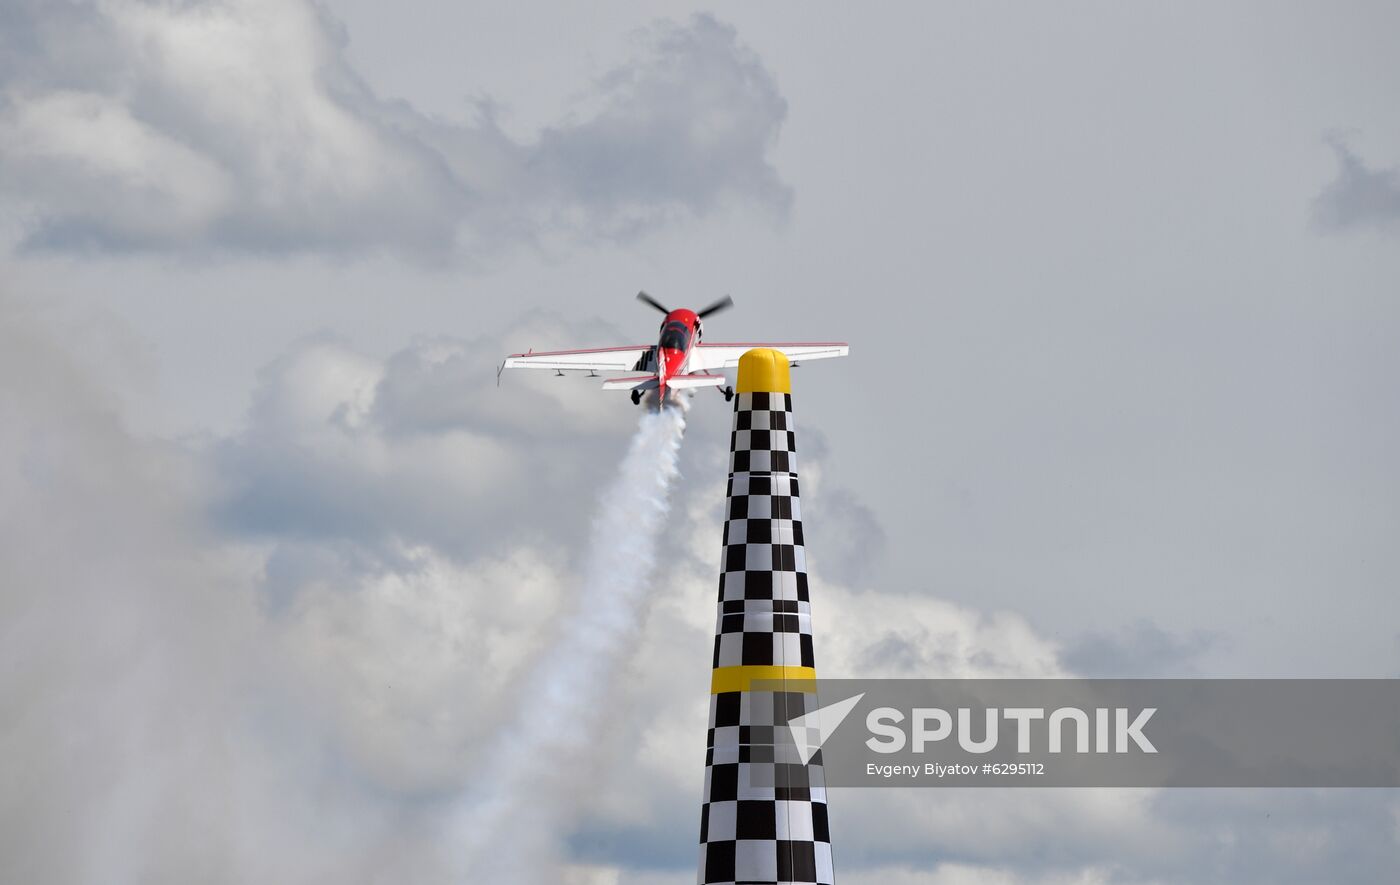 Russia Air Race - Formula 1 Championships